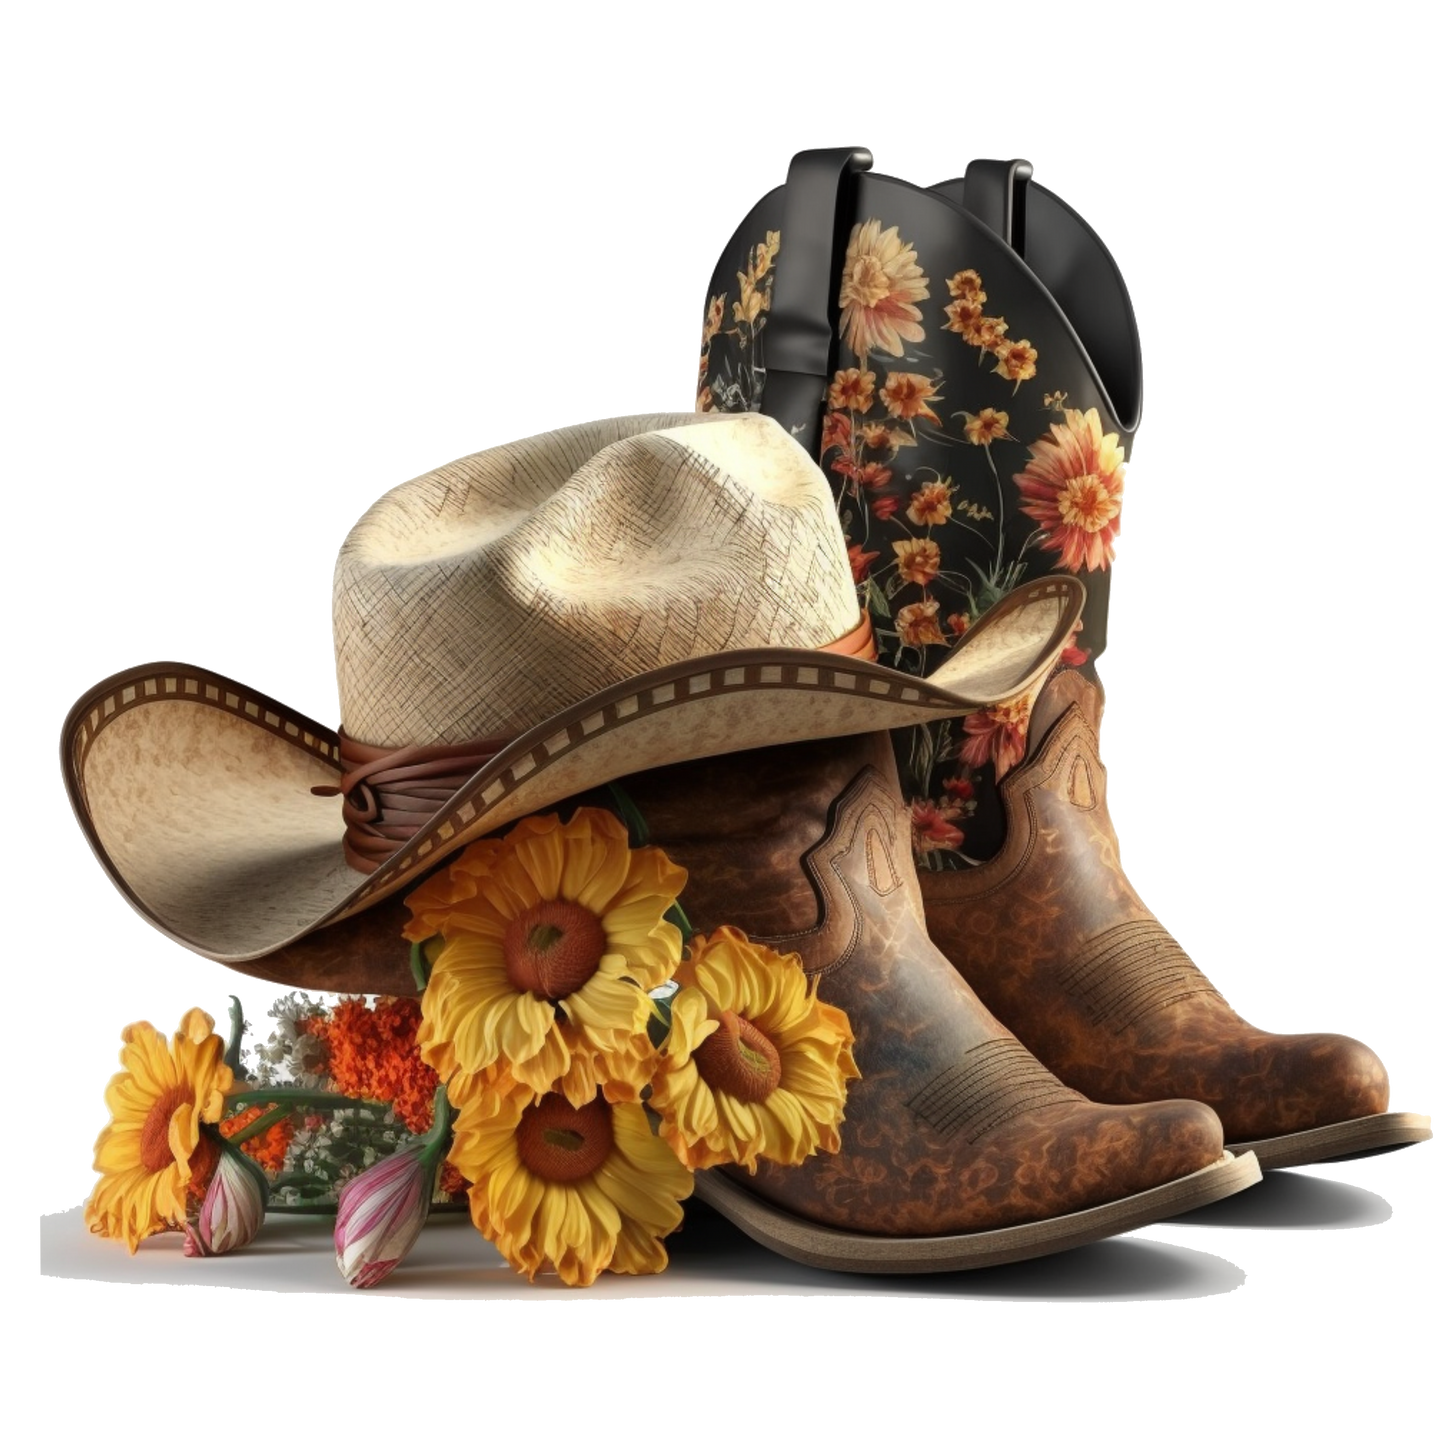 Cowboy Bootsand flowers